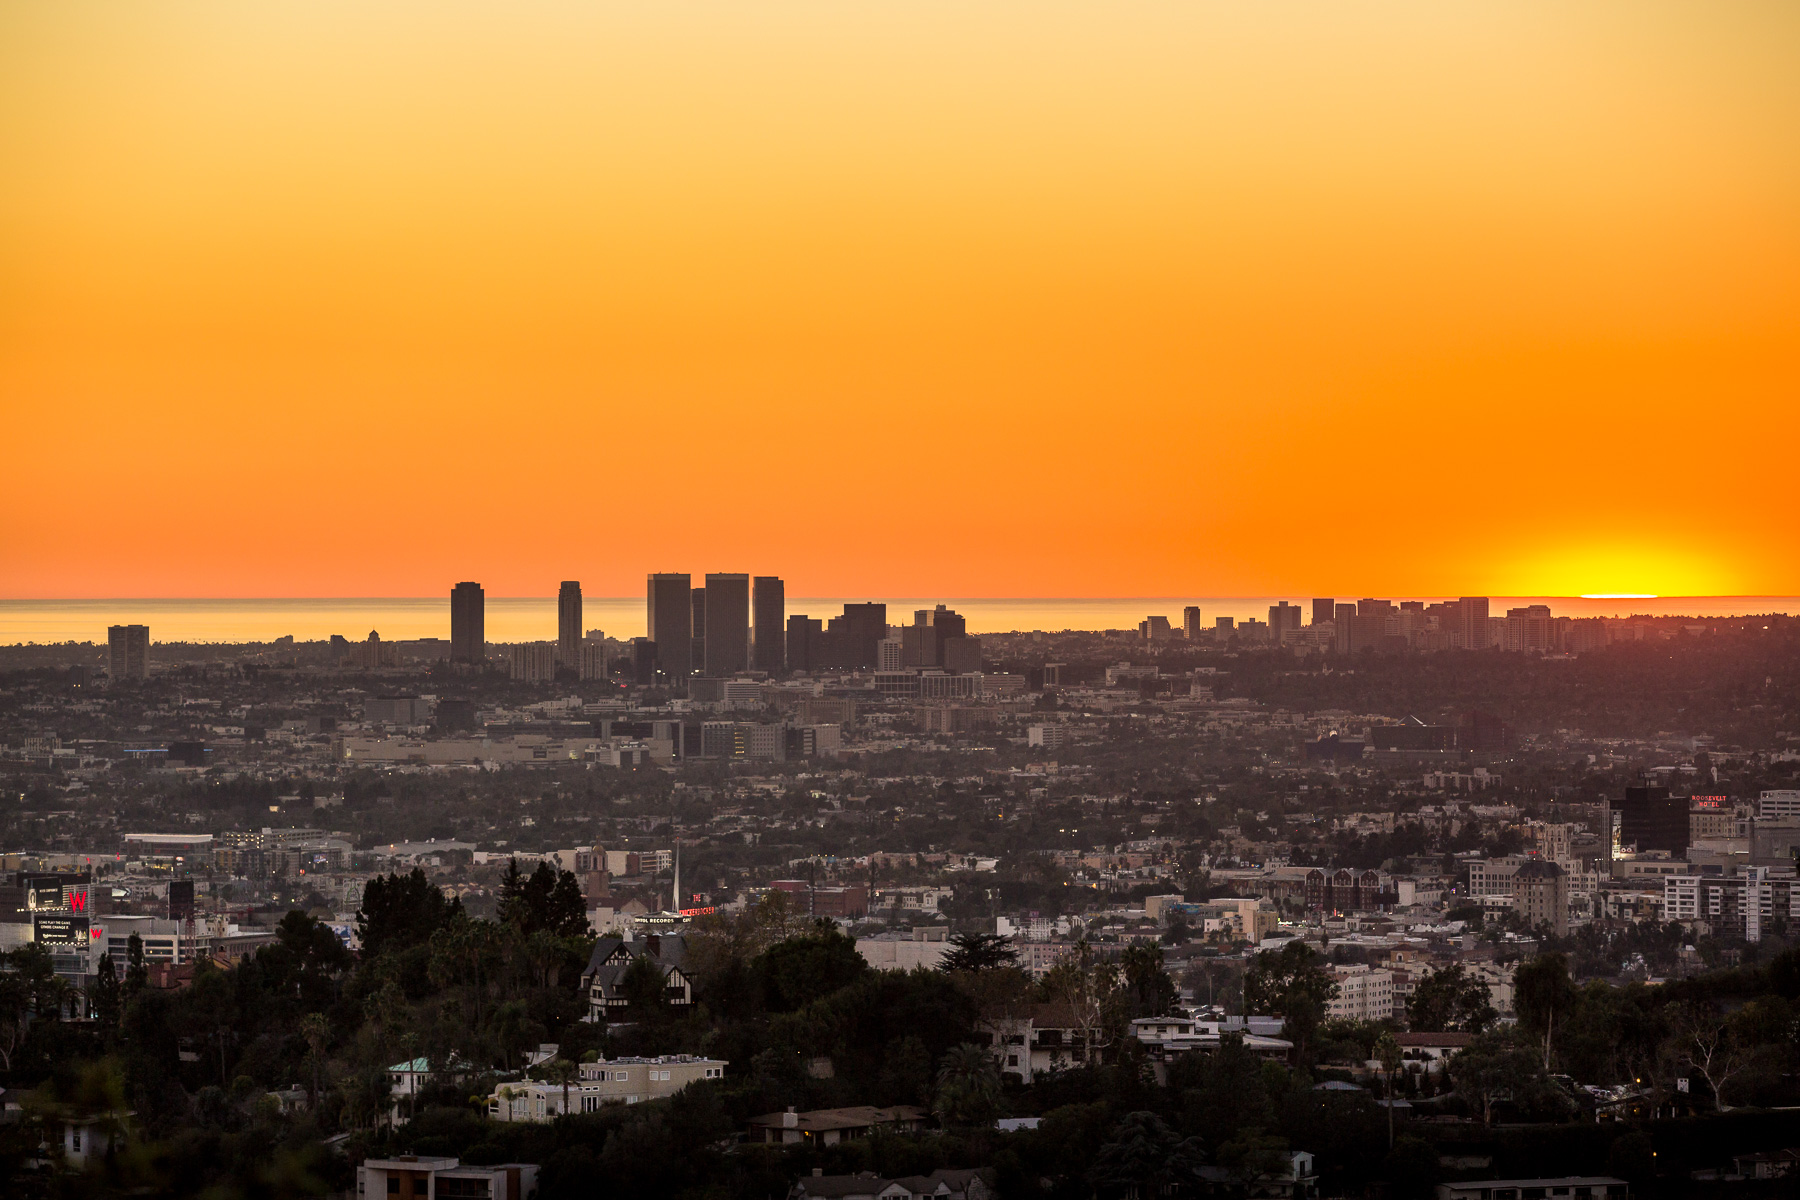 Flat Earth - Los Angeles, CA